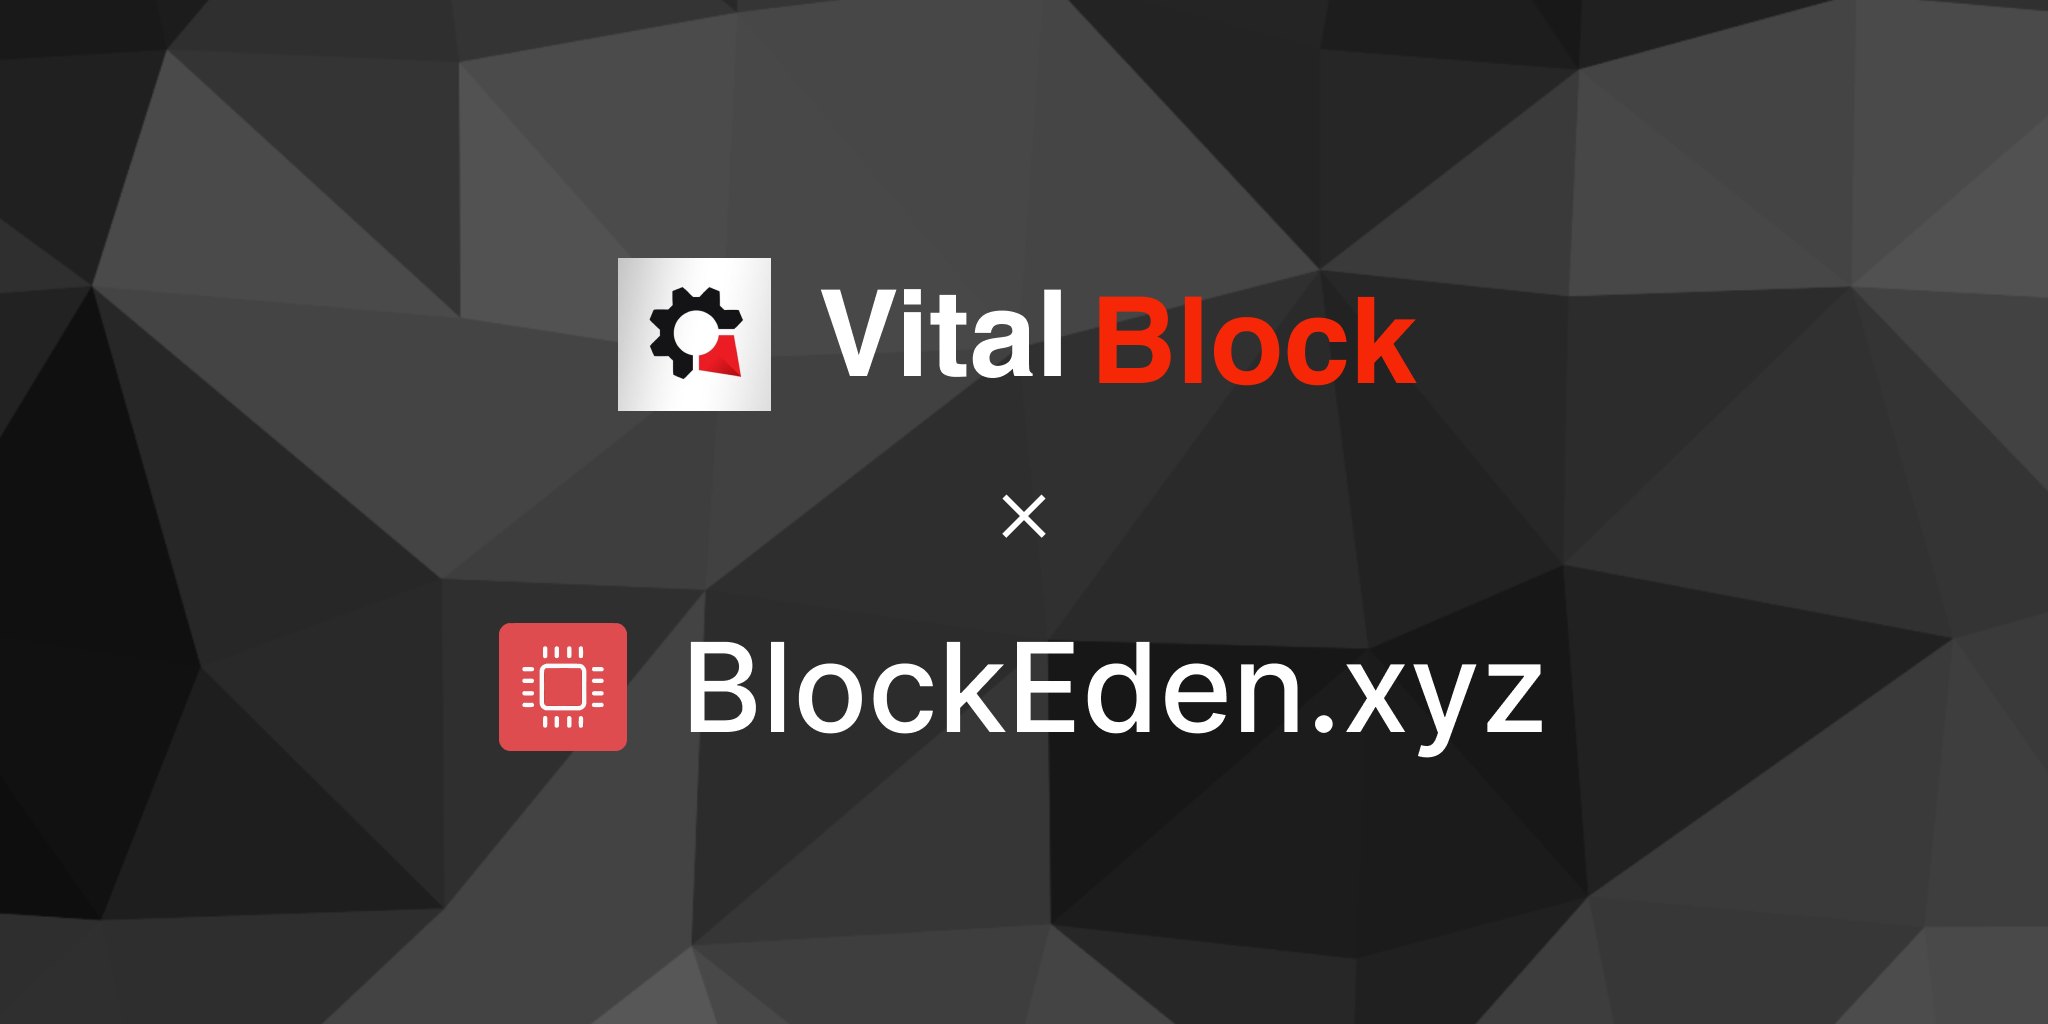 BlockEden.xyz and Vital Block partner up to create a safer blockchain space